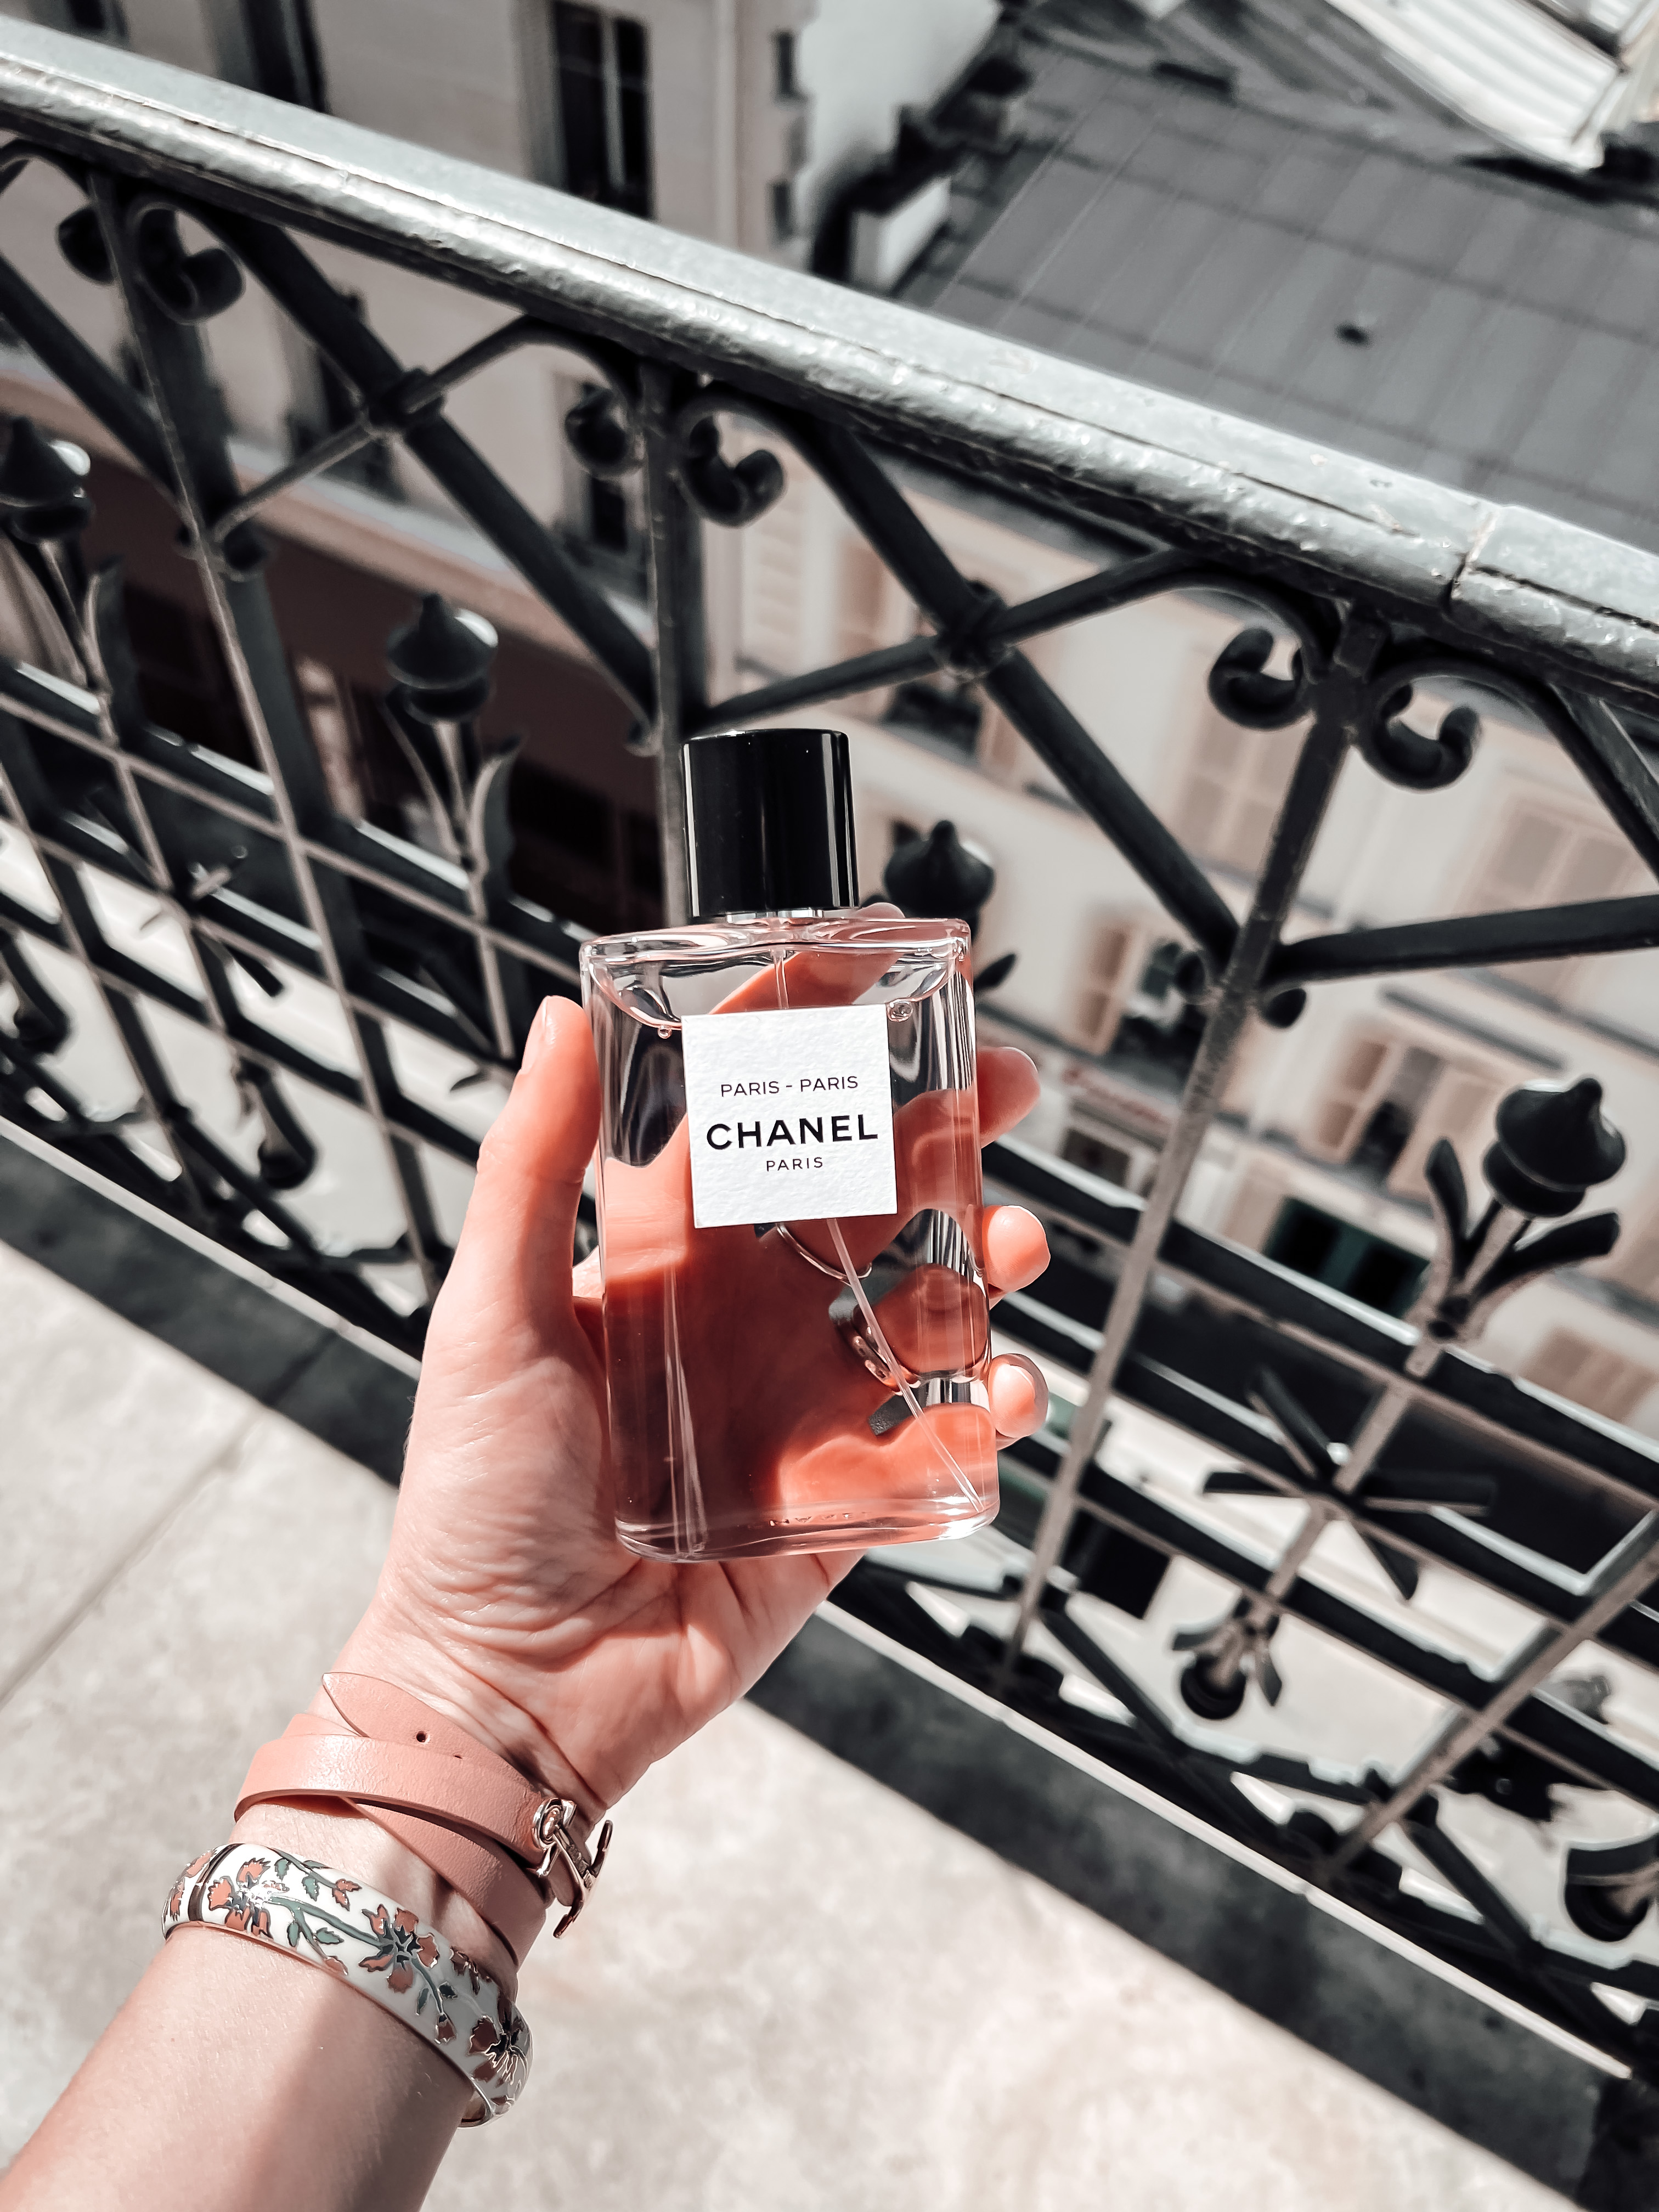 Chanel Paris Paris parfum